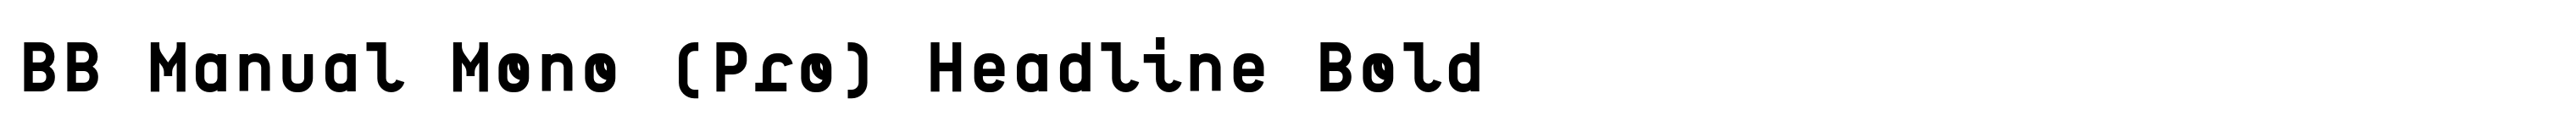 BB Manual Mono (Pro) Headline Bold